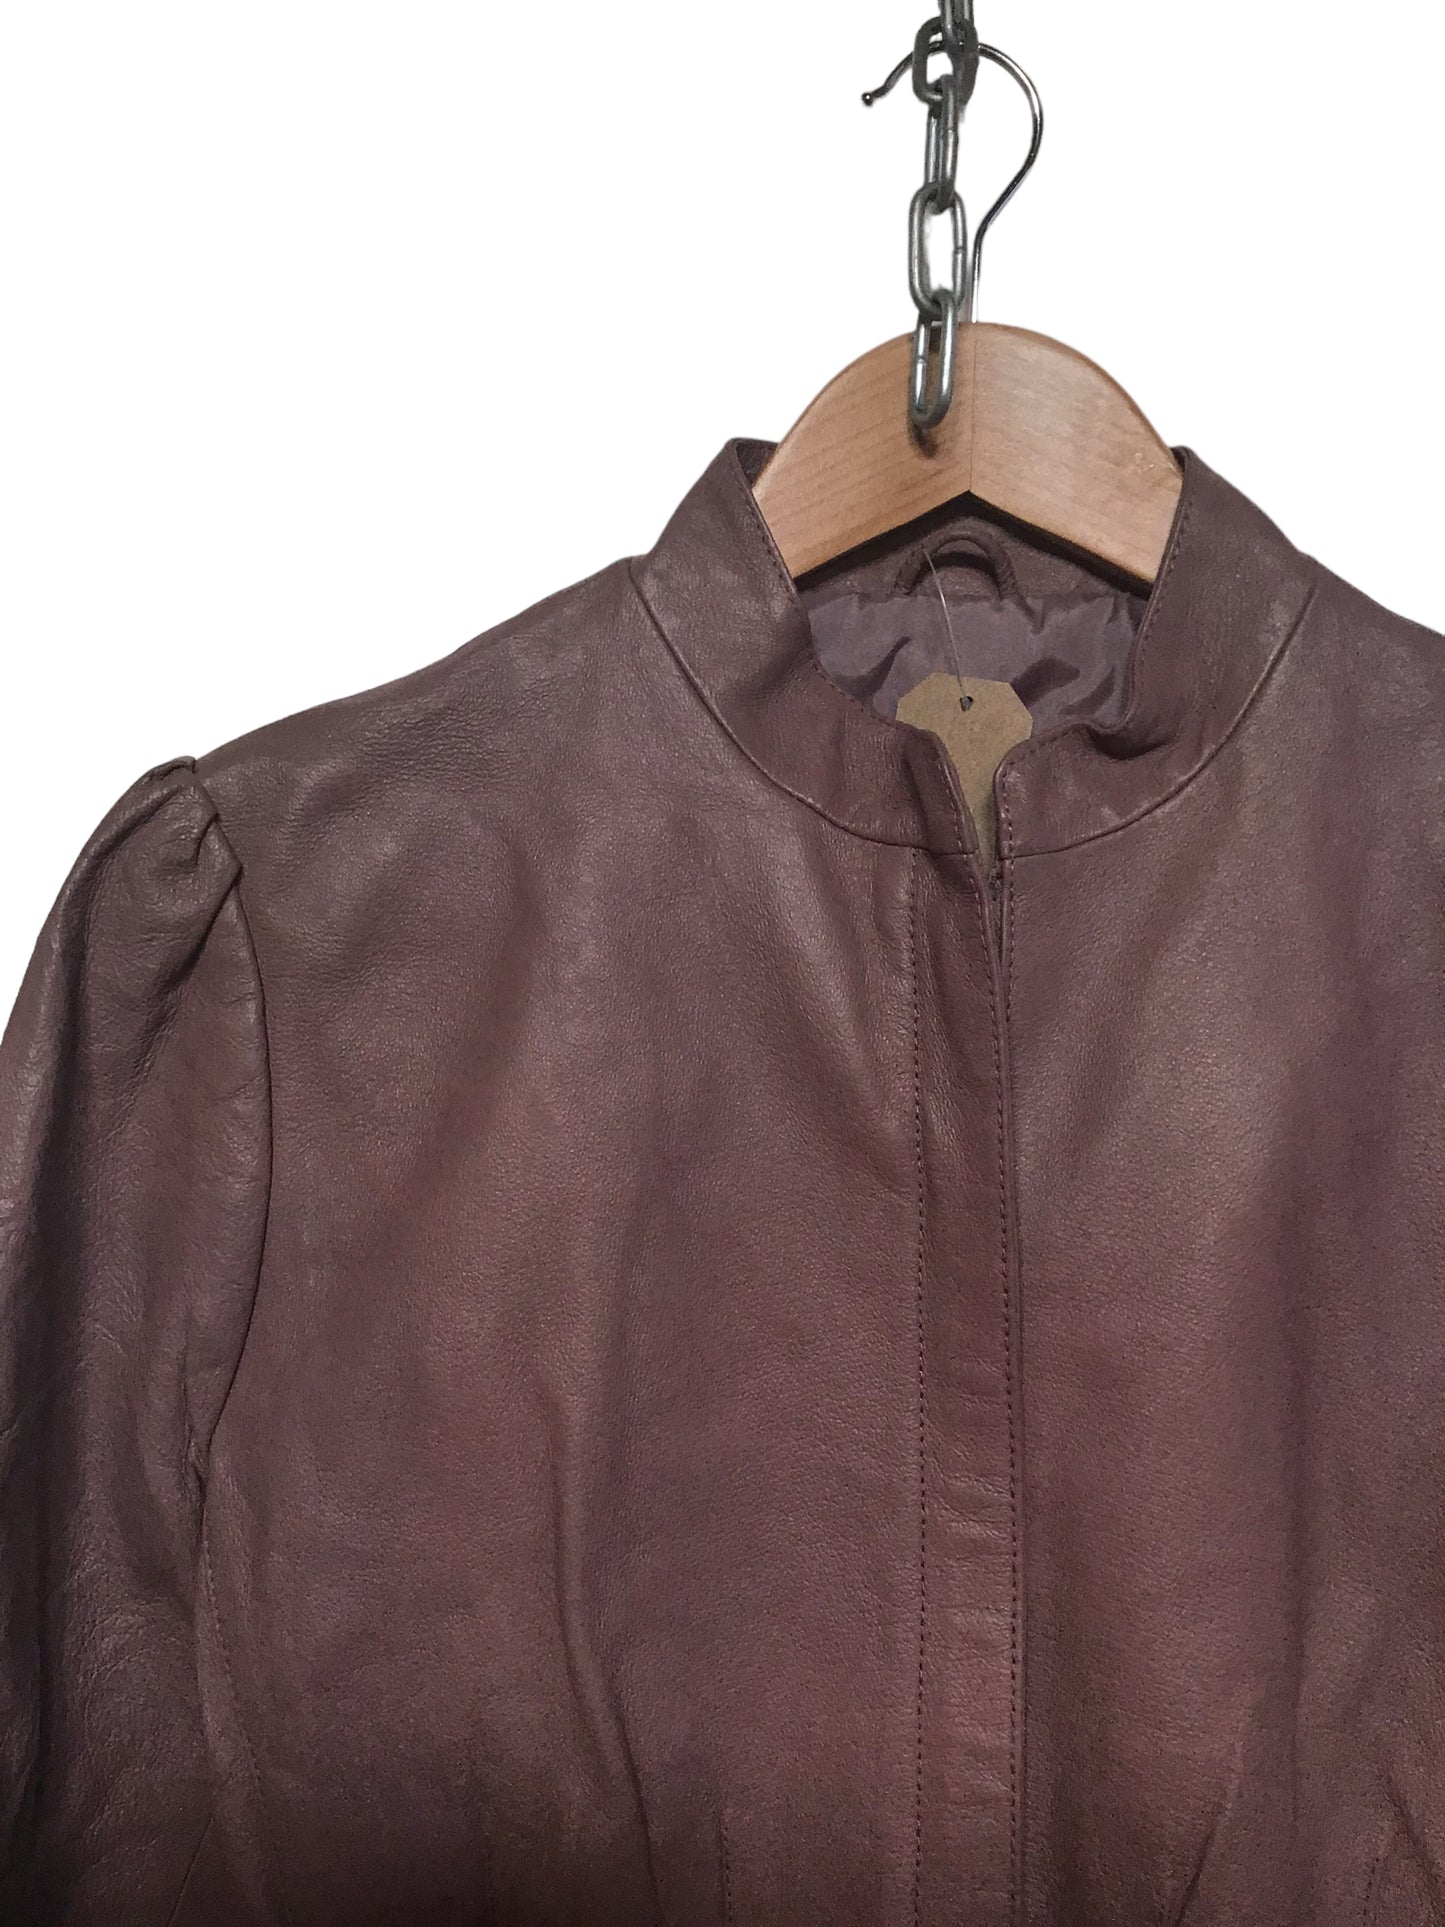 Kit Leather Jacket (Size L)